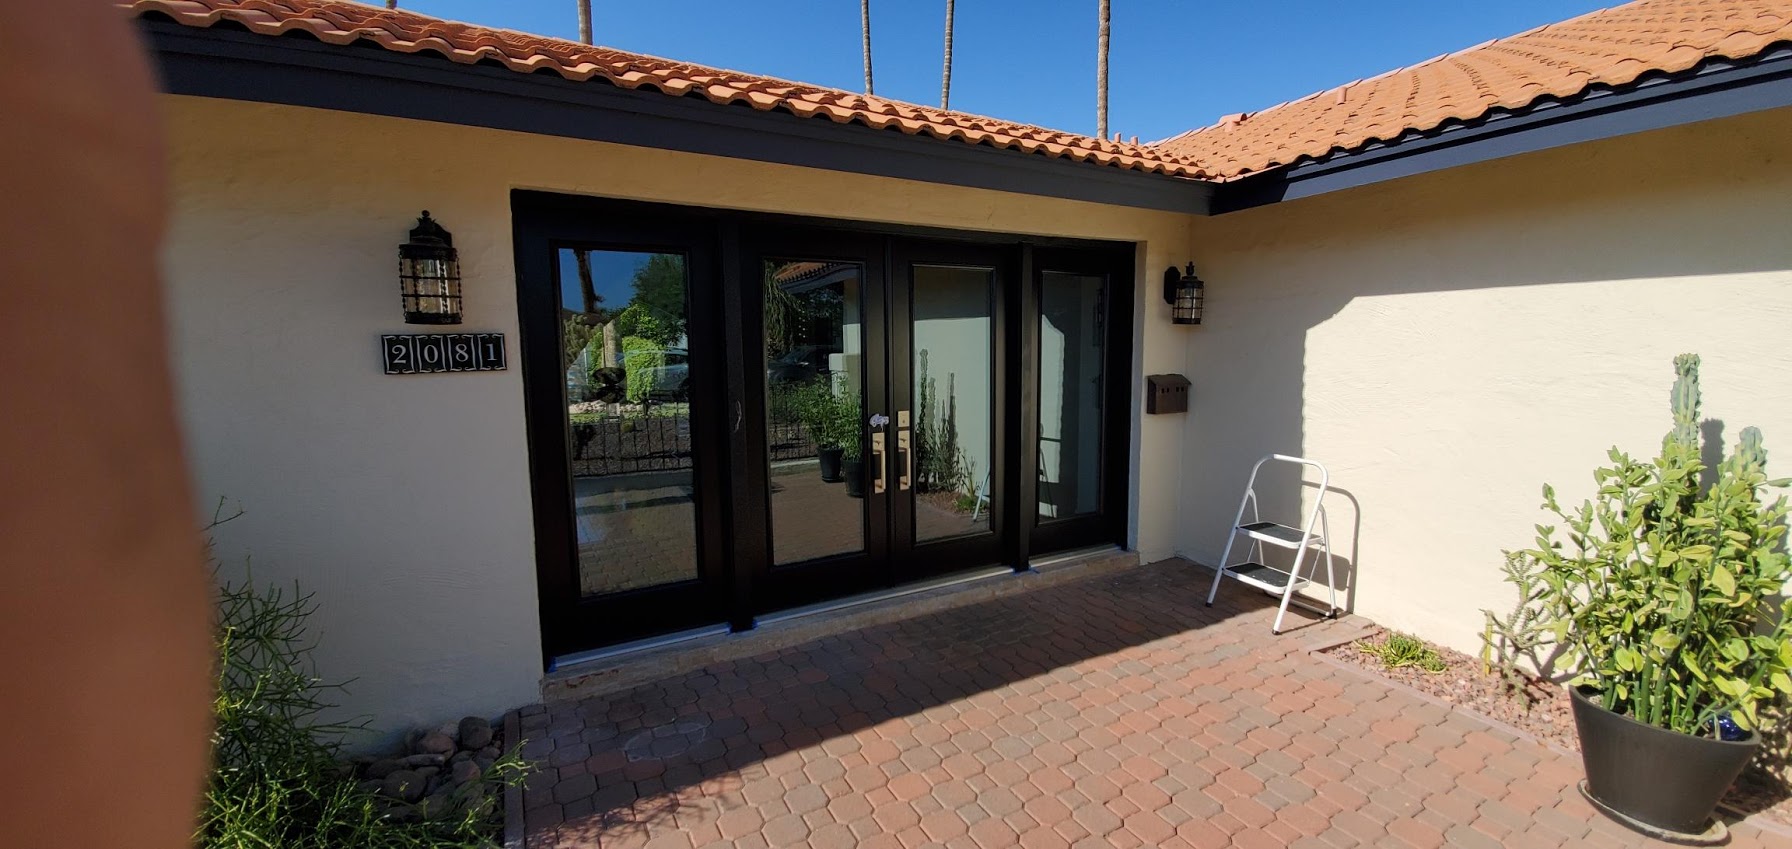 Arizona Window and Door in Scottsdale and Tucson showing front door with large windows